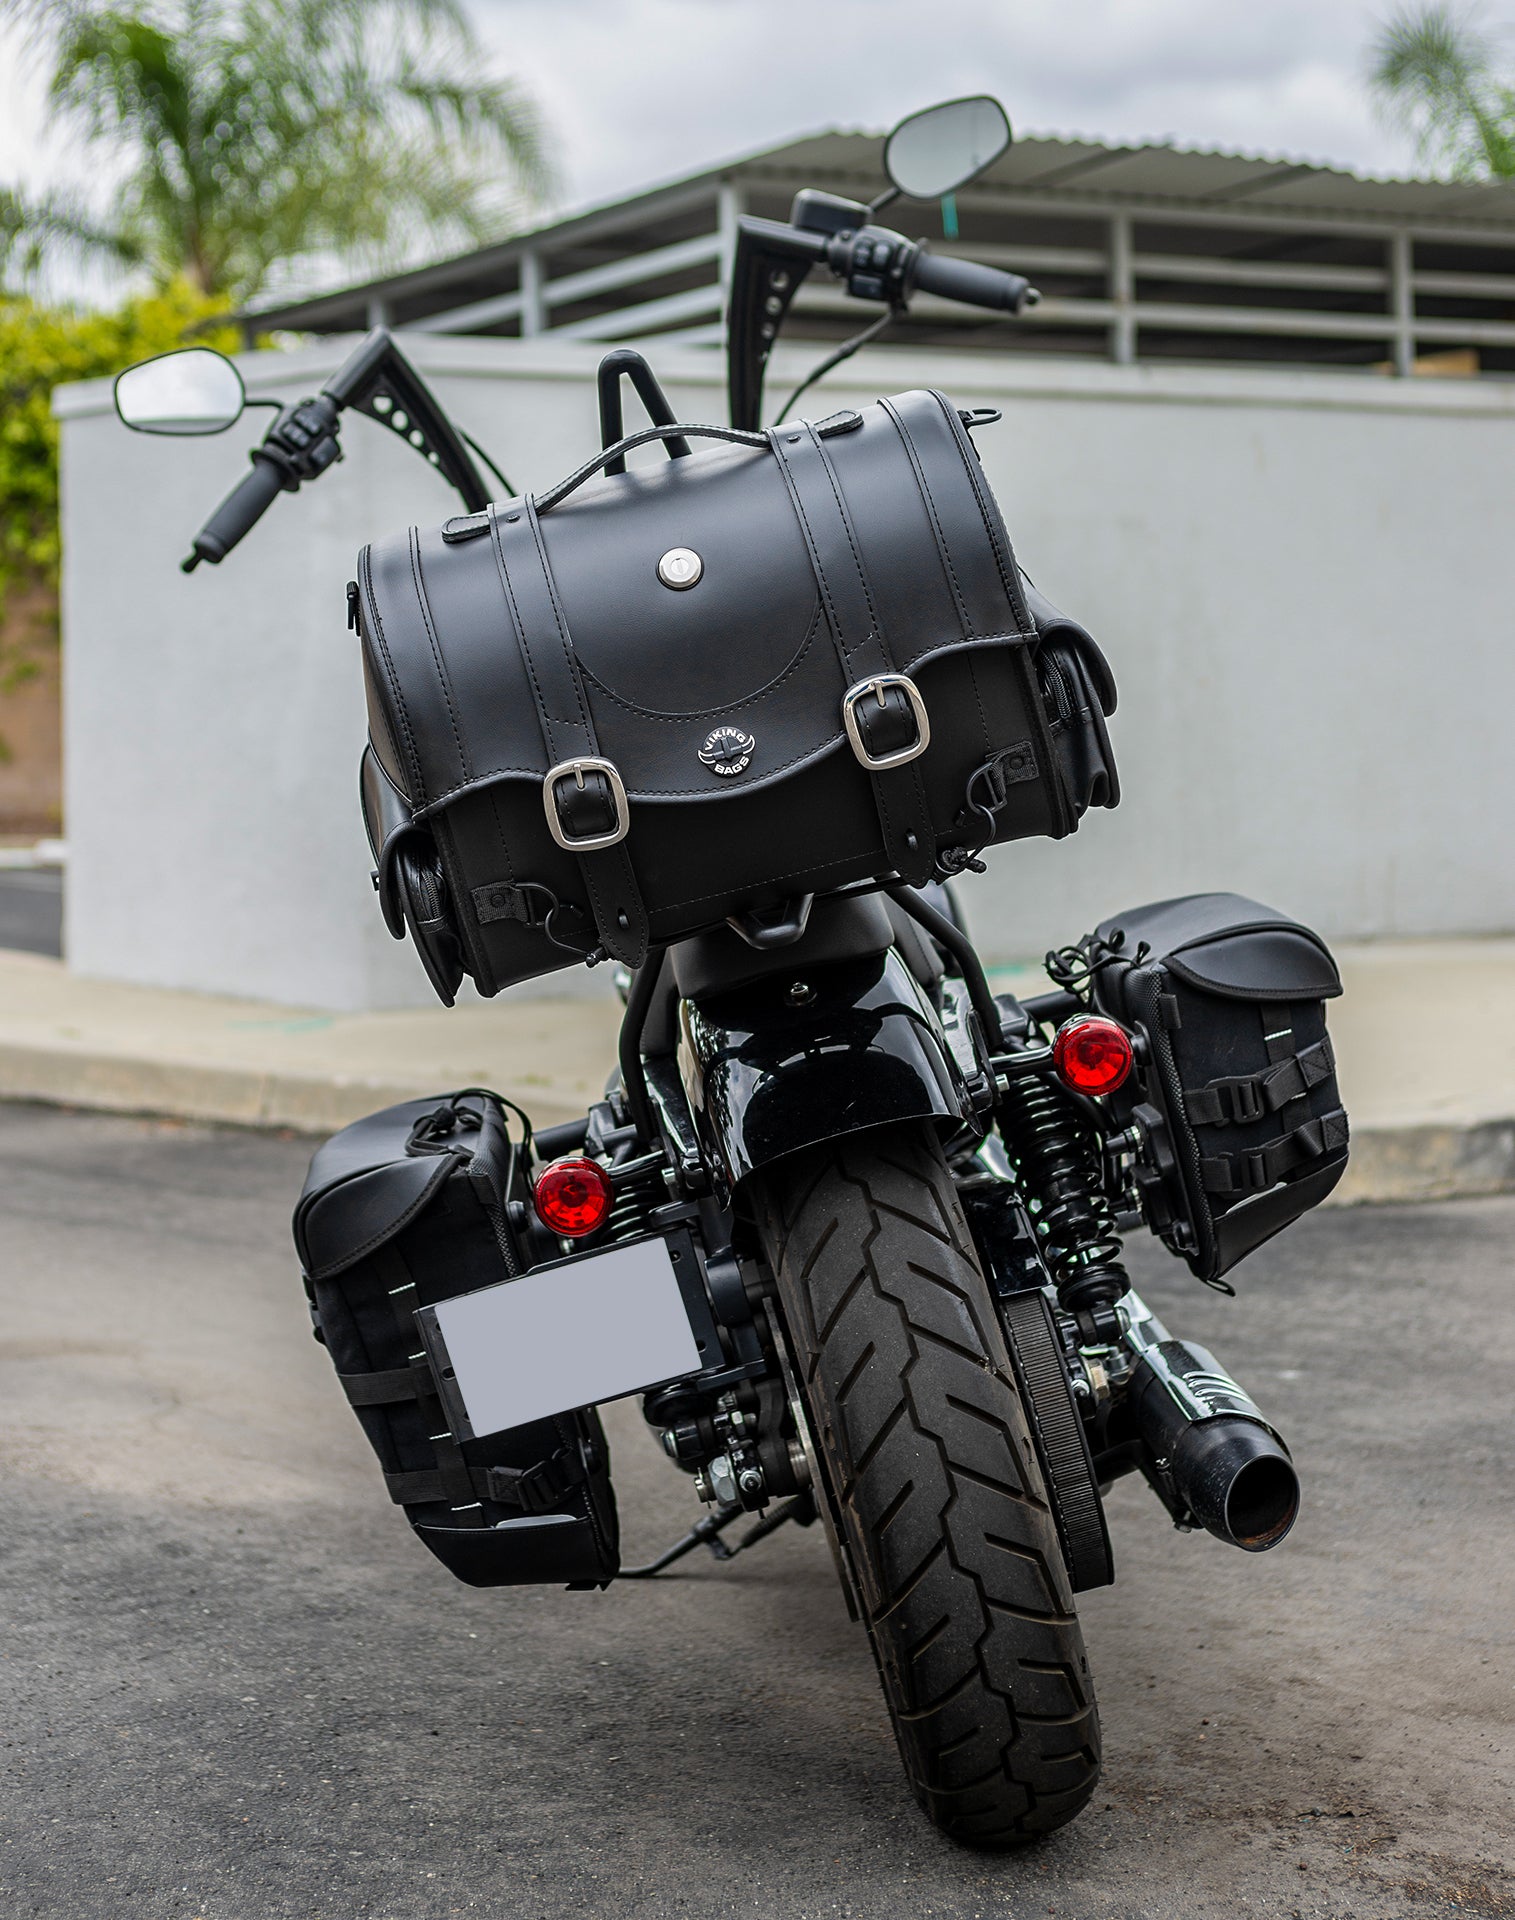 18L - Century Medium Indian Leather Motorcycle Trunk Bag